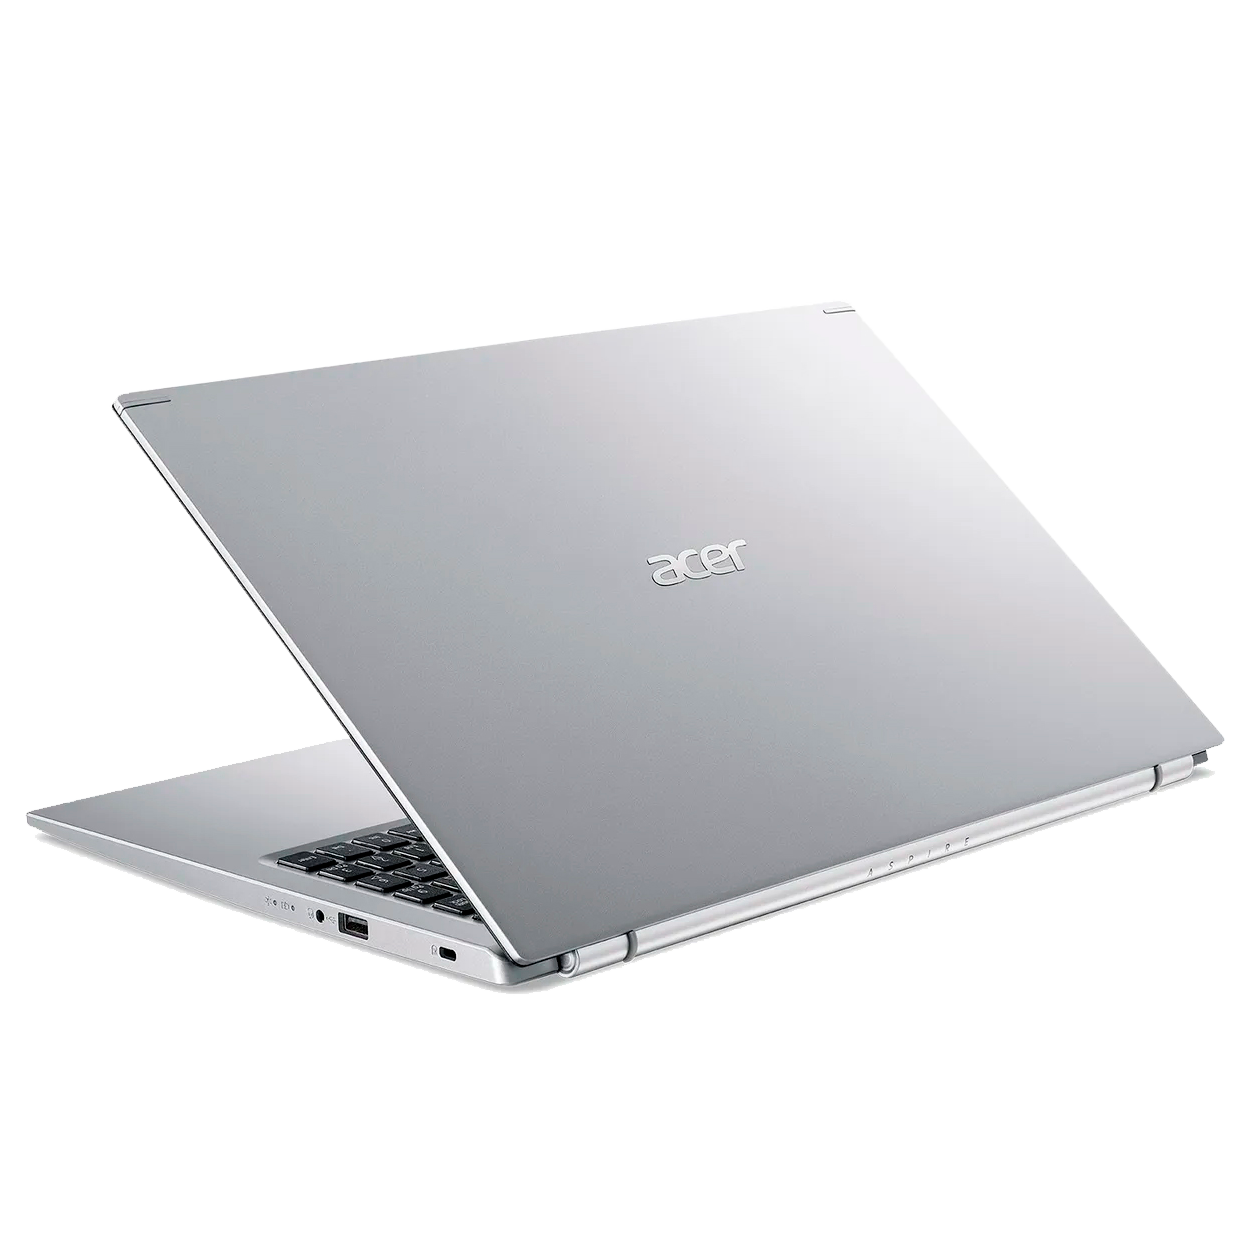 Acer Swift 1. Ноутбук Acer Swift 1 sf114-34-p1bn серебристый. Ультрабук Acer Swift 3. Ноутбук Acer Swift 1 sf114-34-p22p NX.a75er.006. Ноутбук acer aspire 3 silver